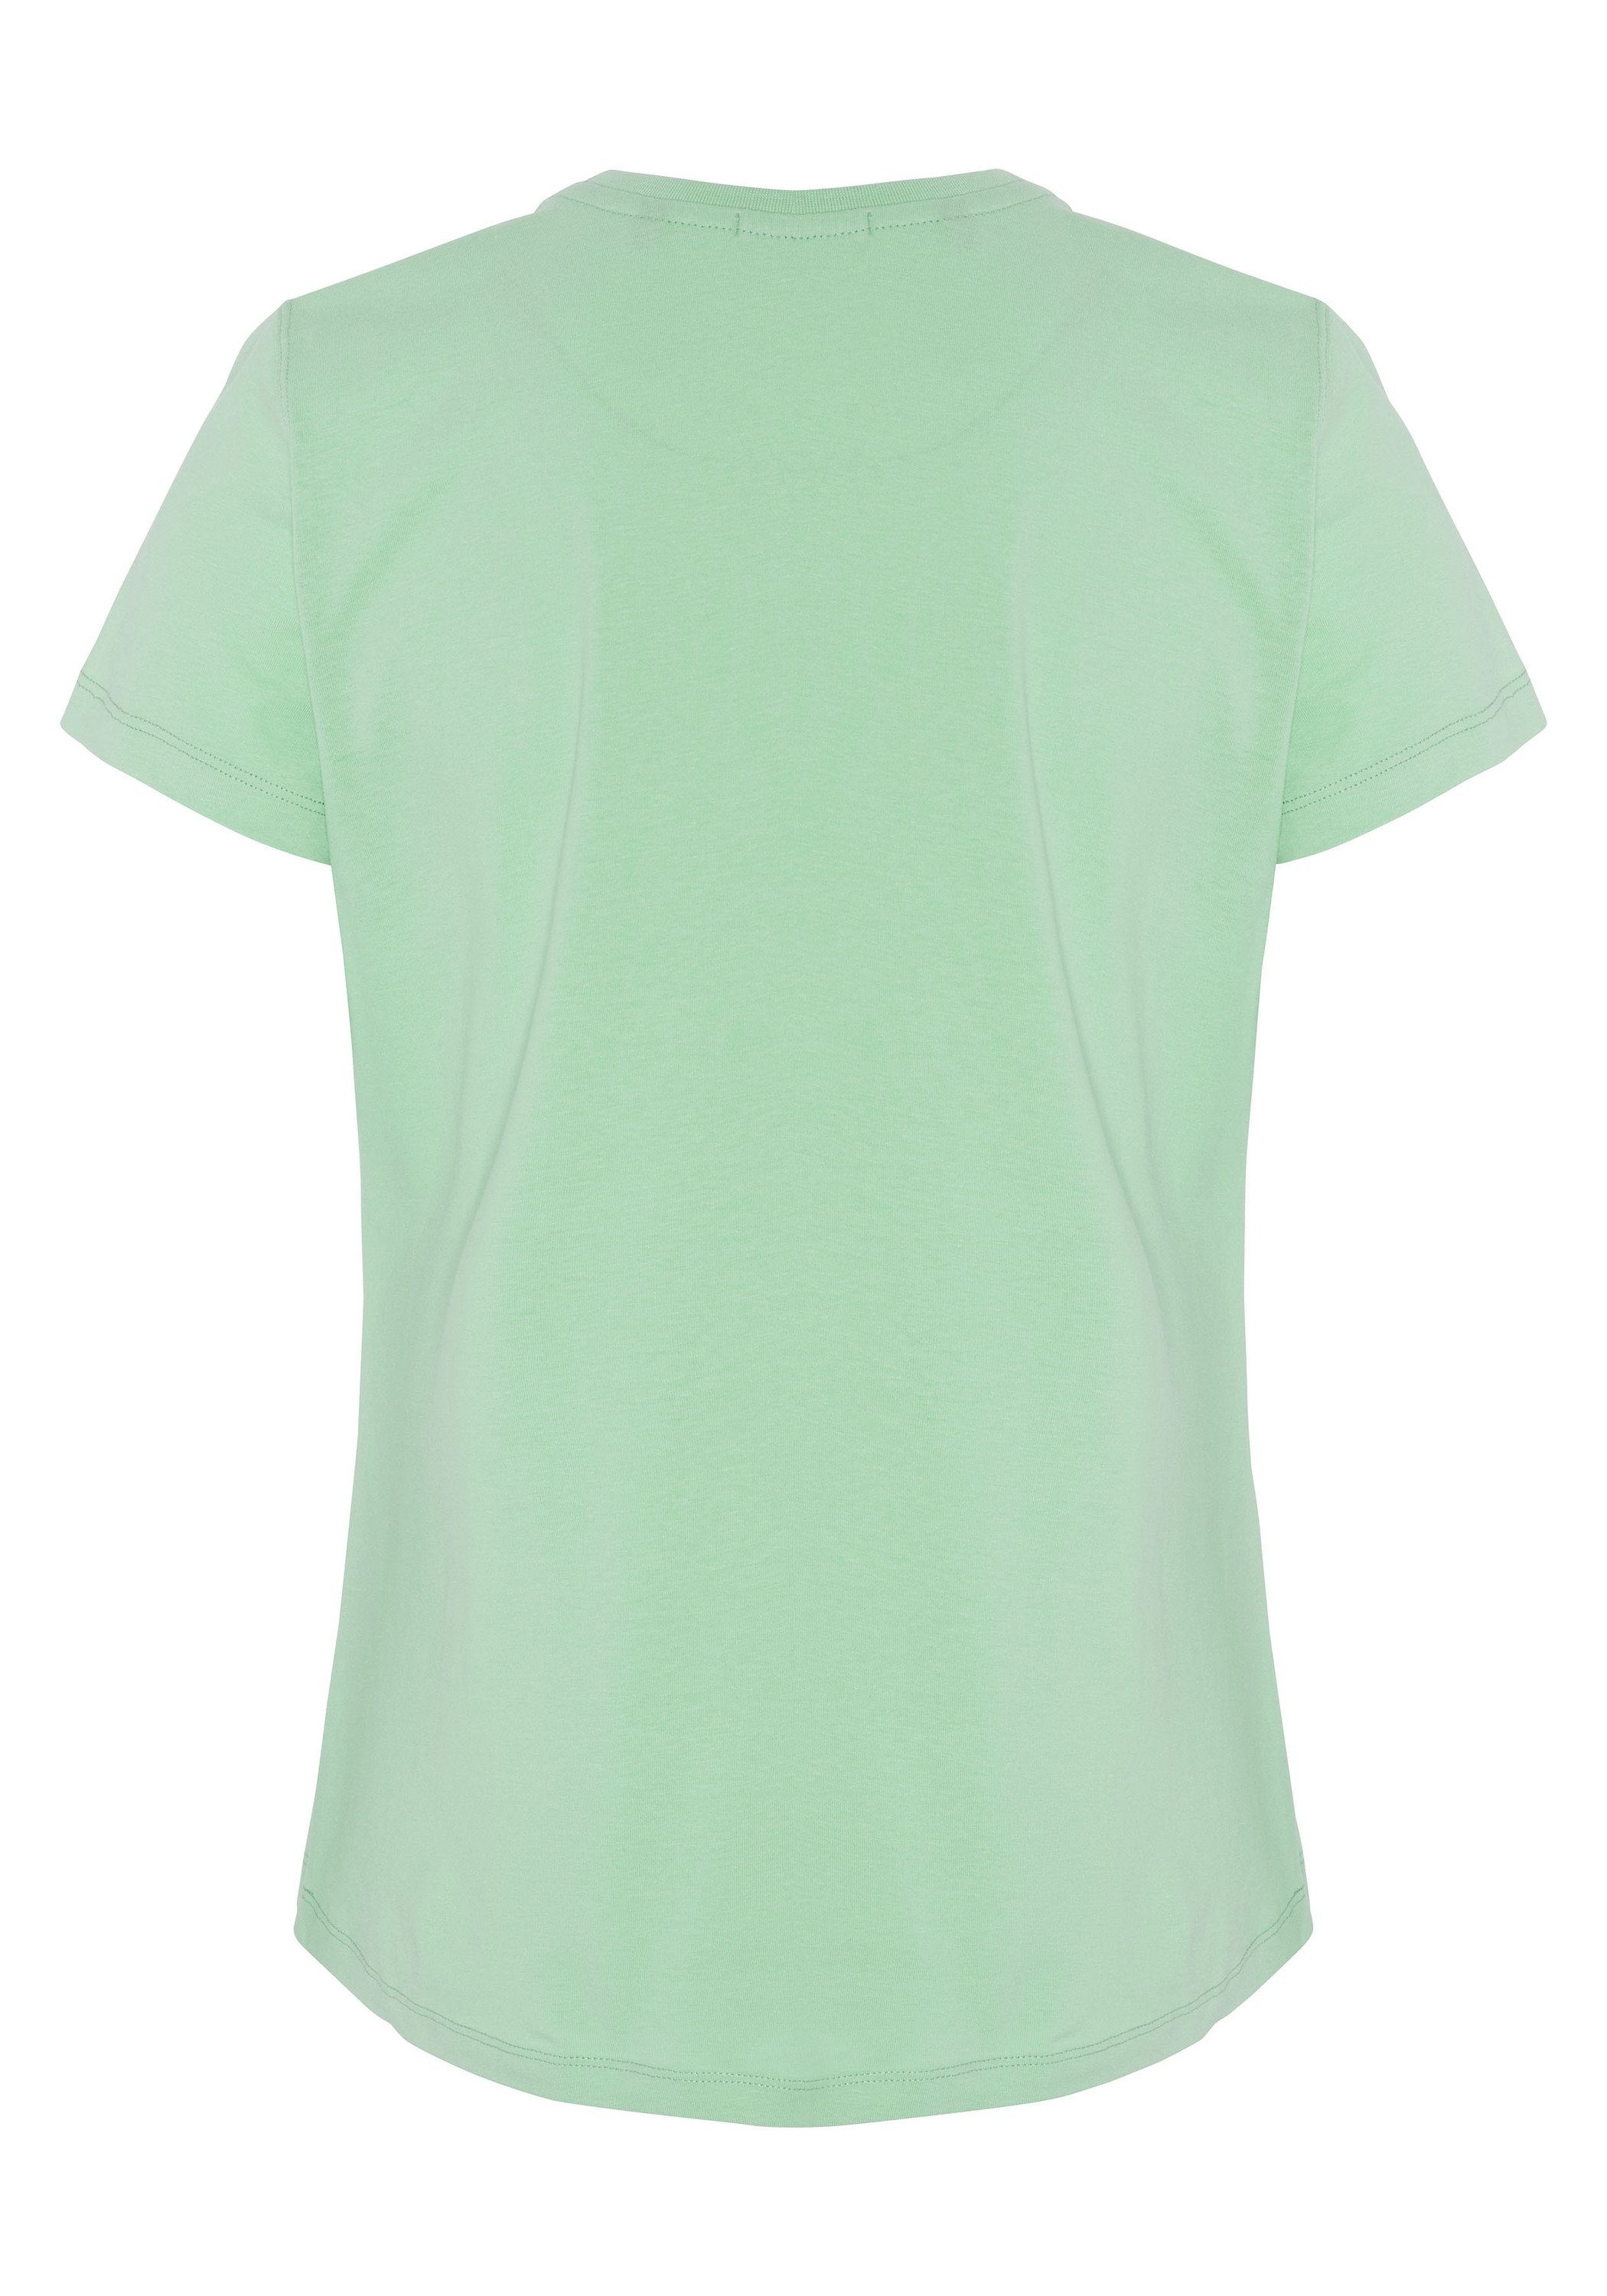 Chiemsee Print-Shirt farbenfrohem T-Shirt 1 mit Frontprint Green Neptune